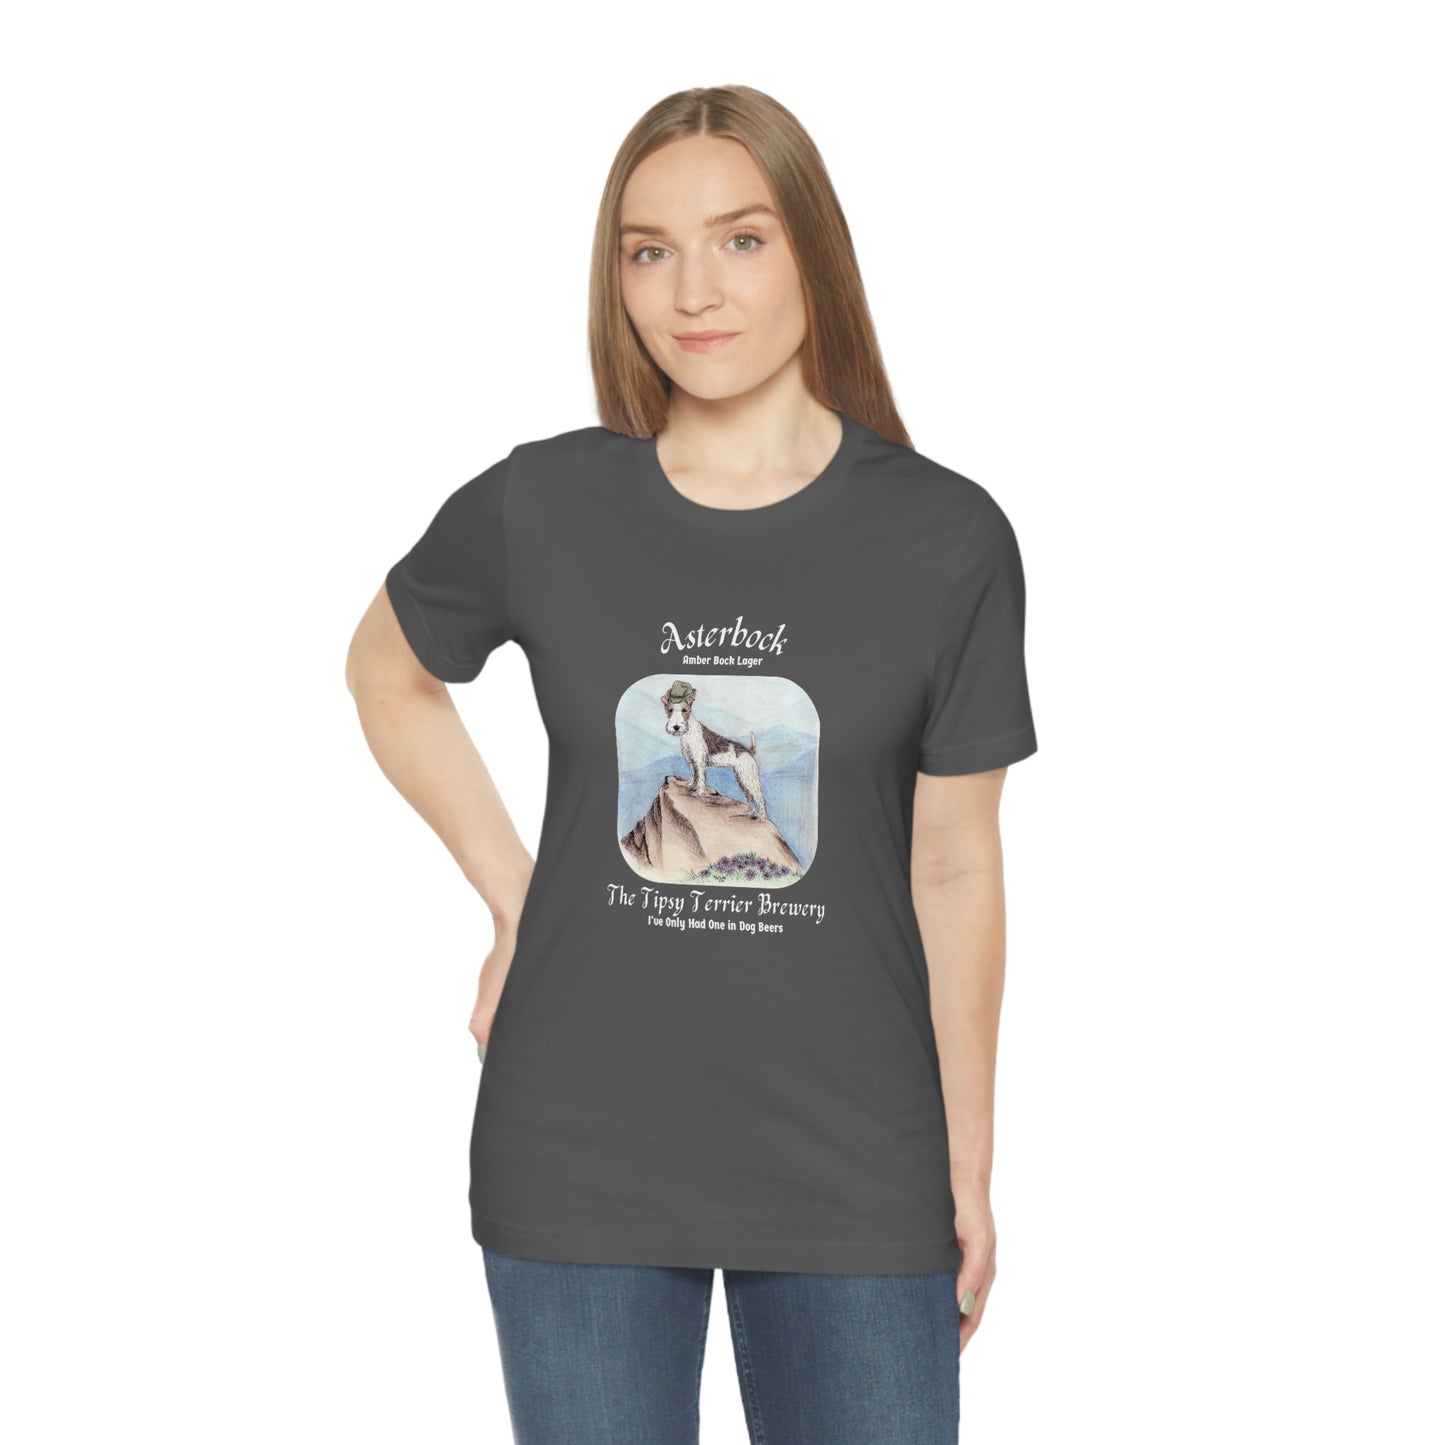 Tipsy Terrier Asterbock T-Shirt